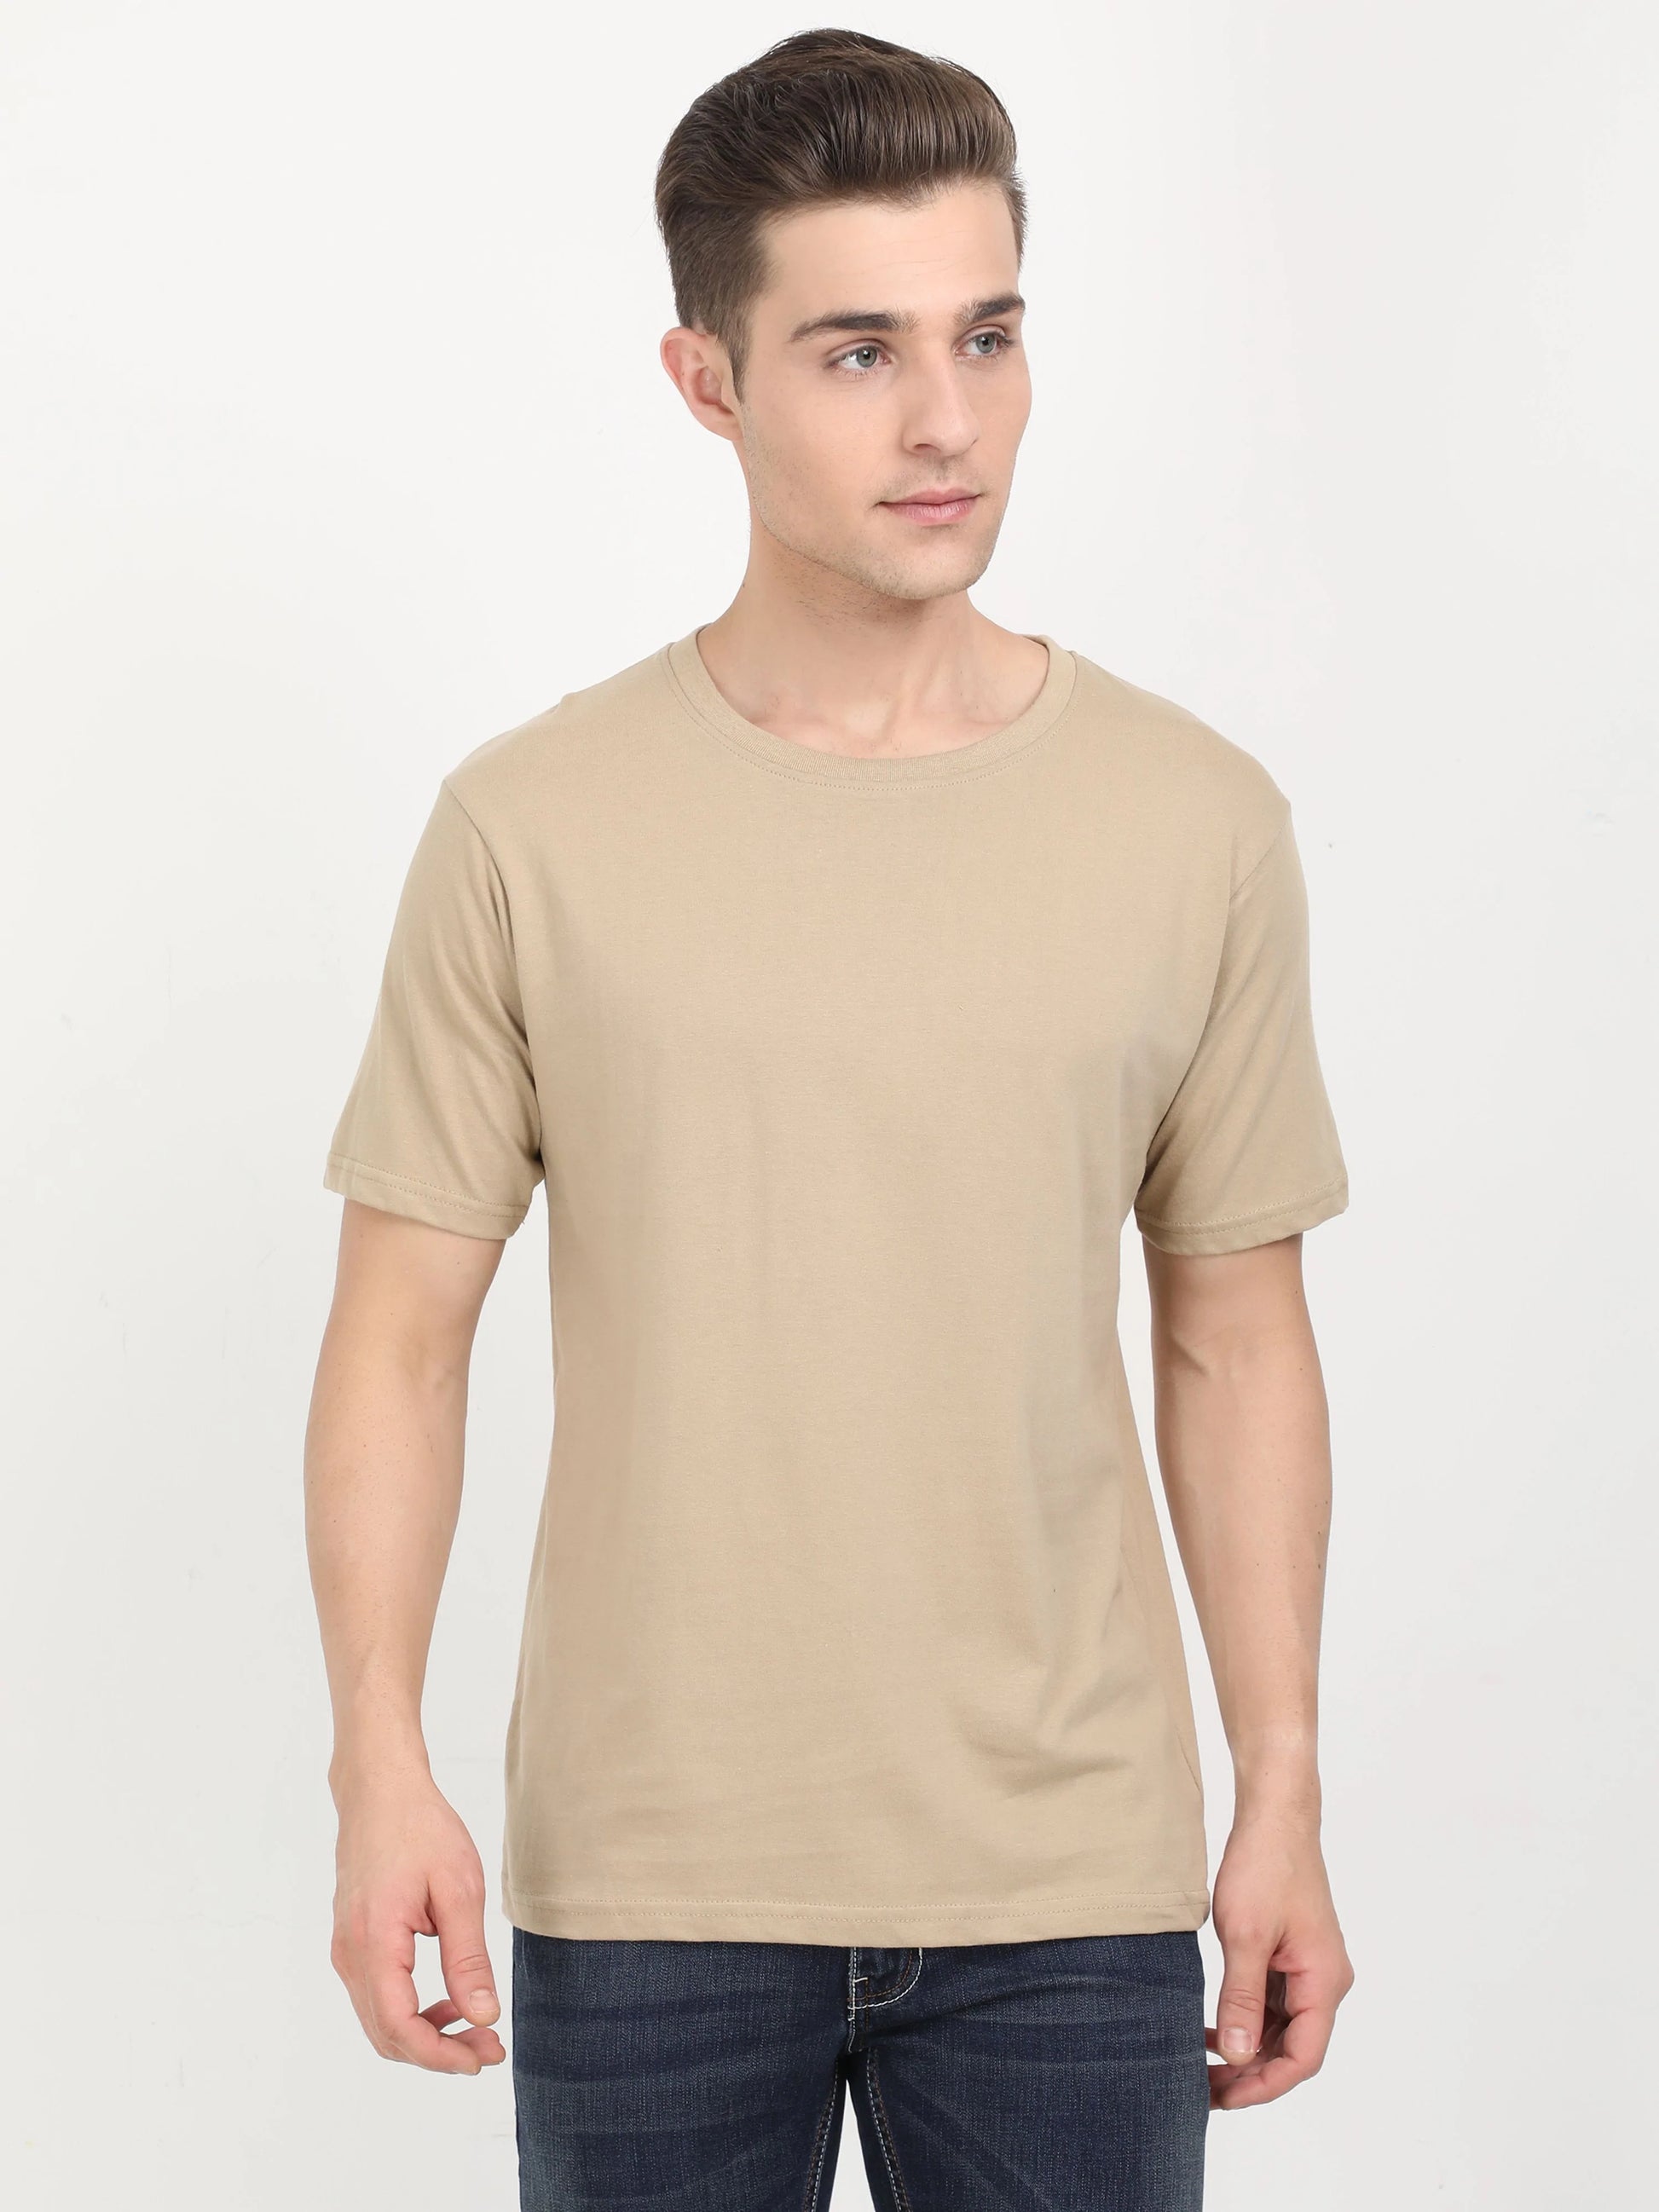 Fleximaa Men's Cotton Plain Round Neck Half Sleeve T-Shirt (Pack of 4) - fleximaa-so